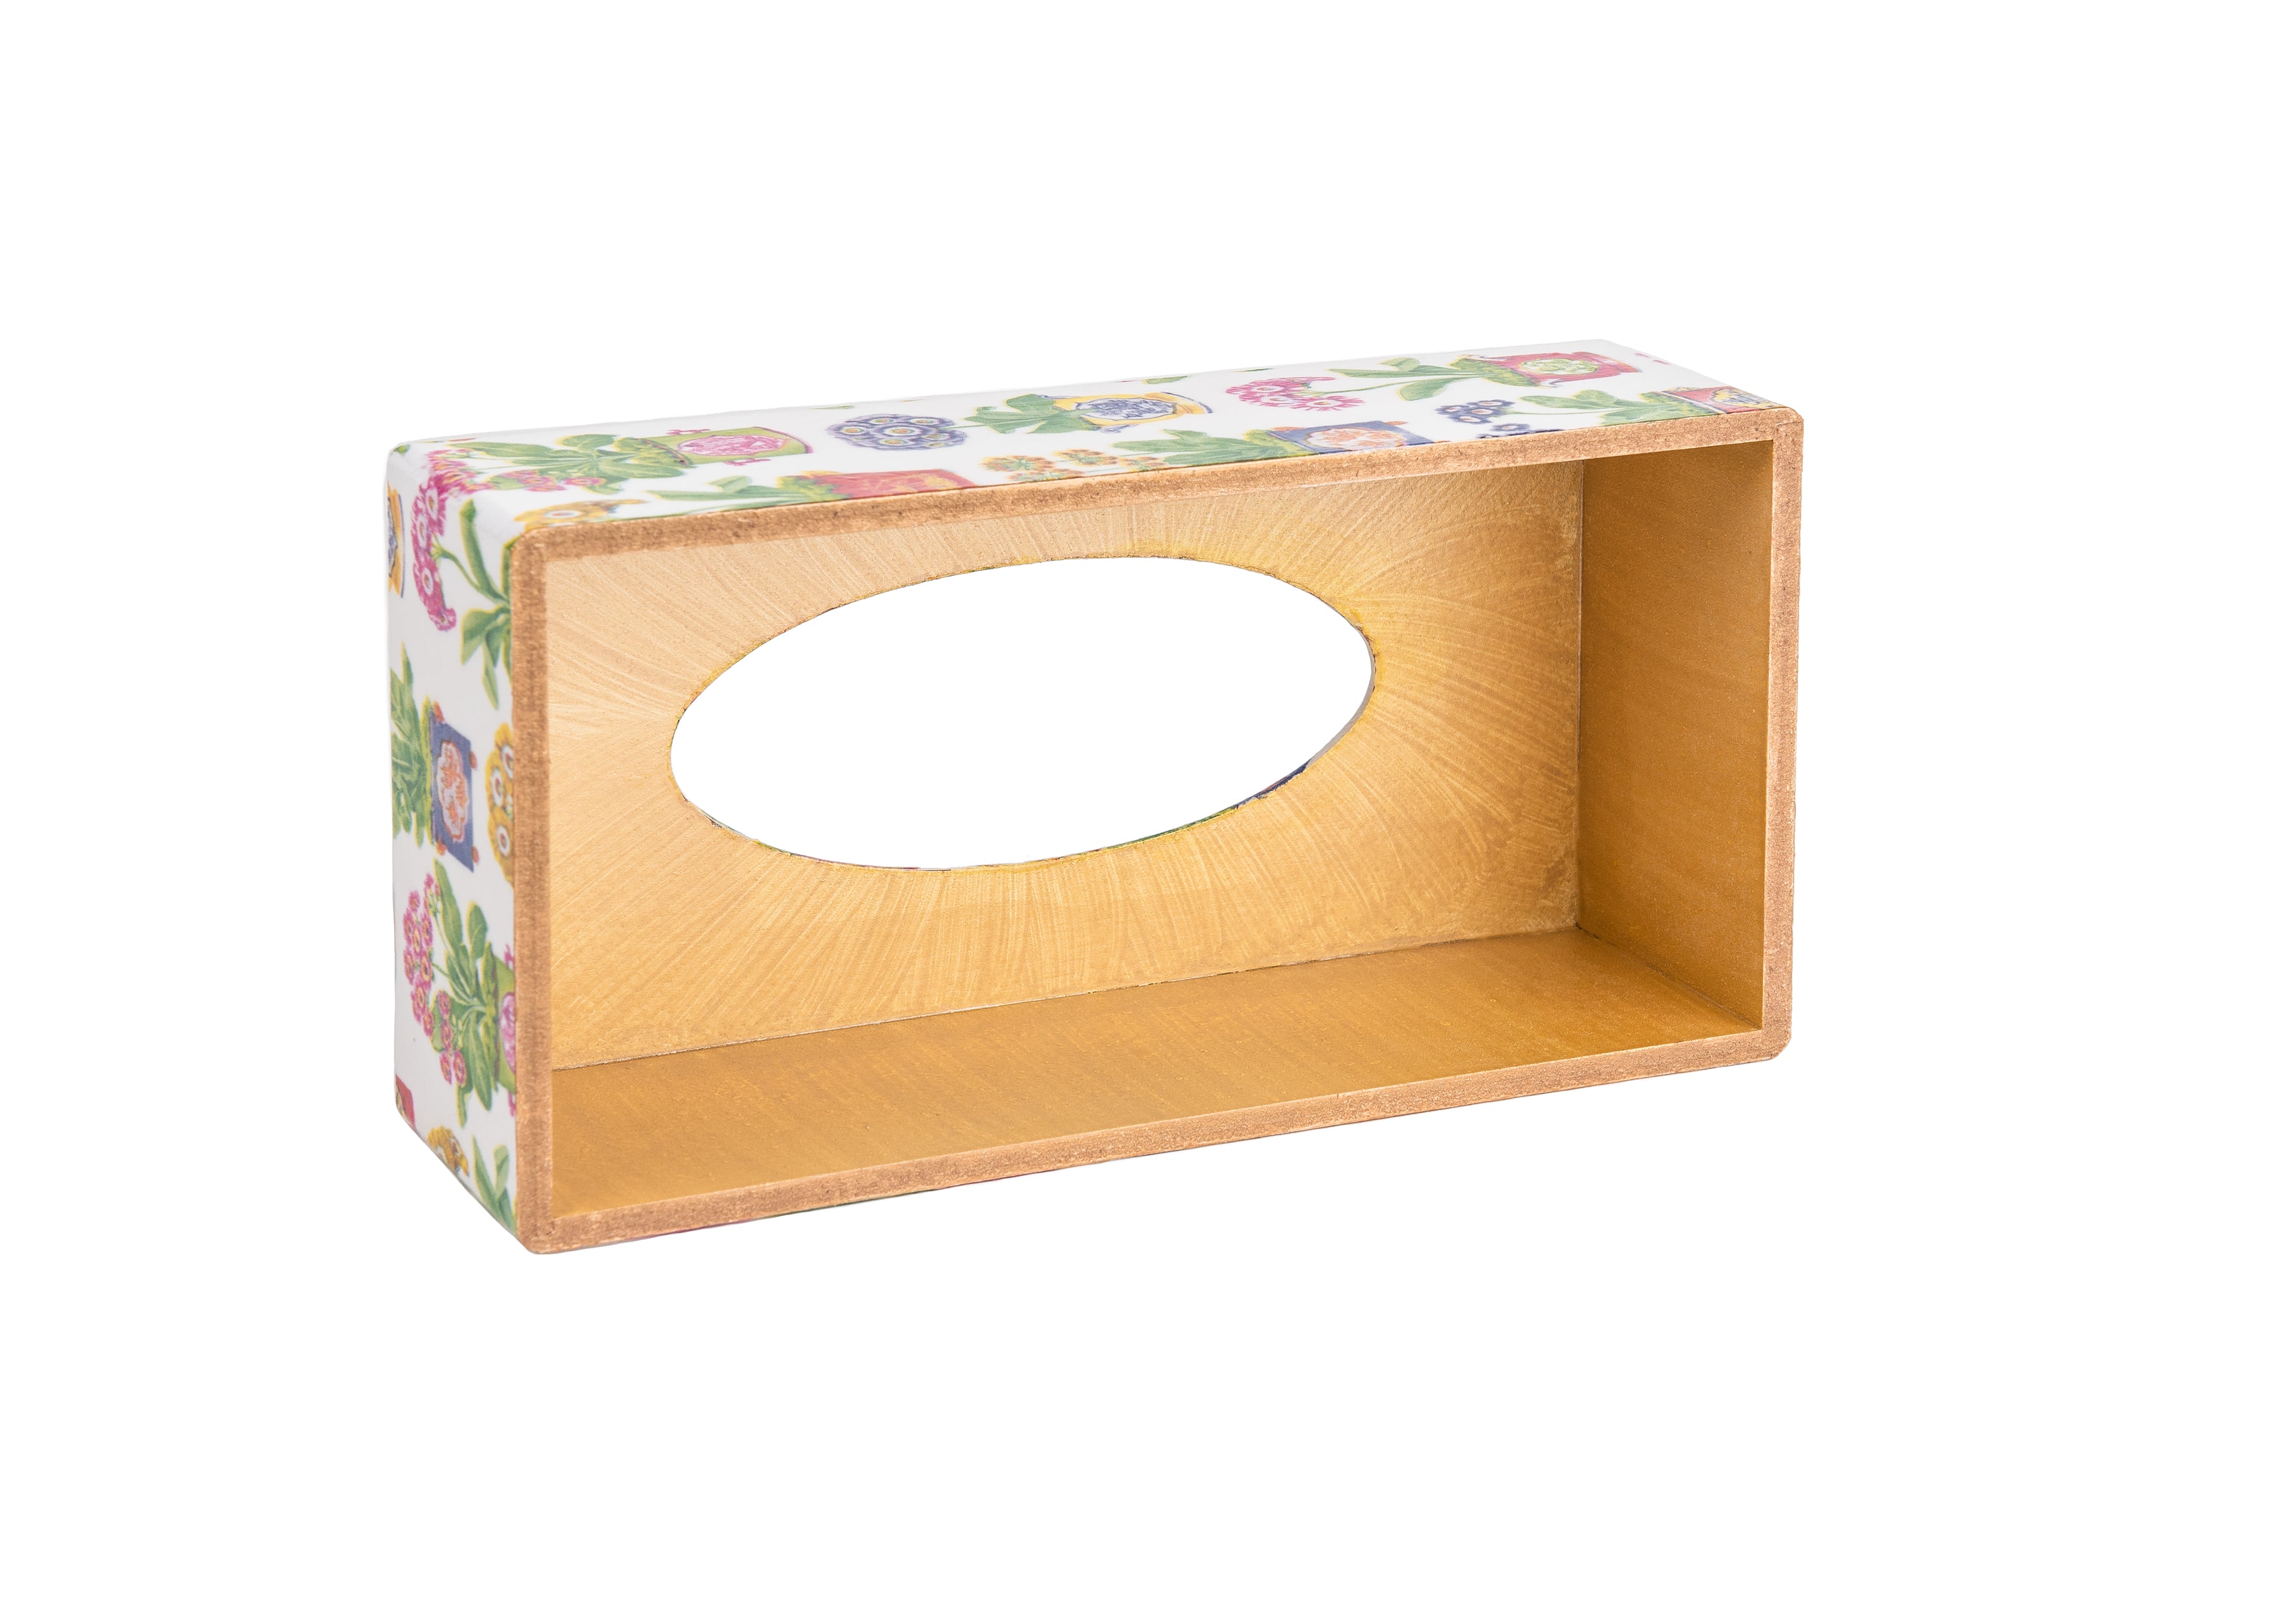 Auricula rectangular wooden tissue box cover